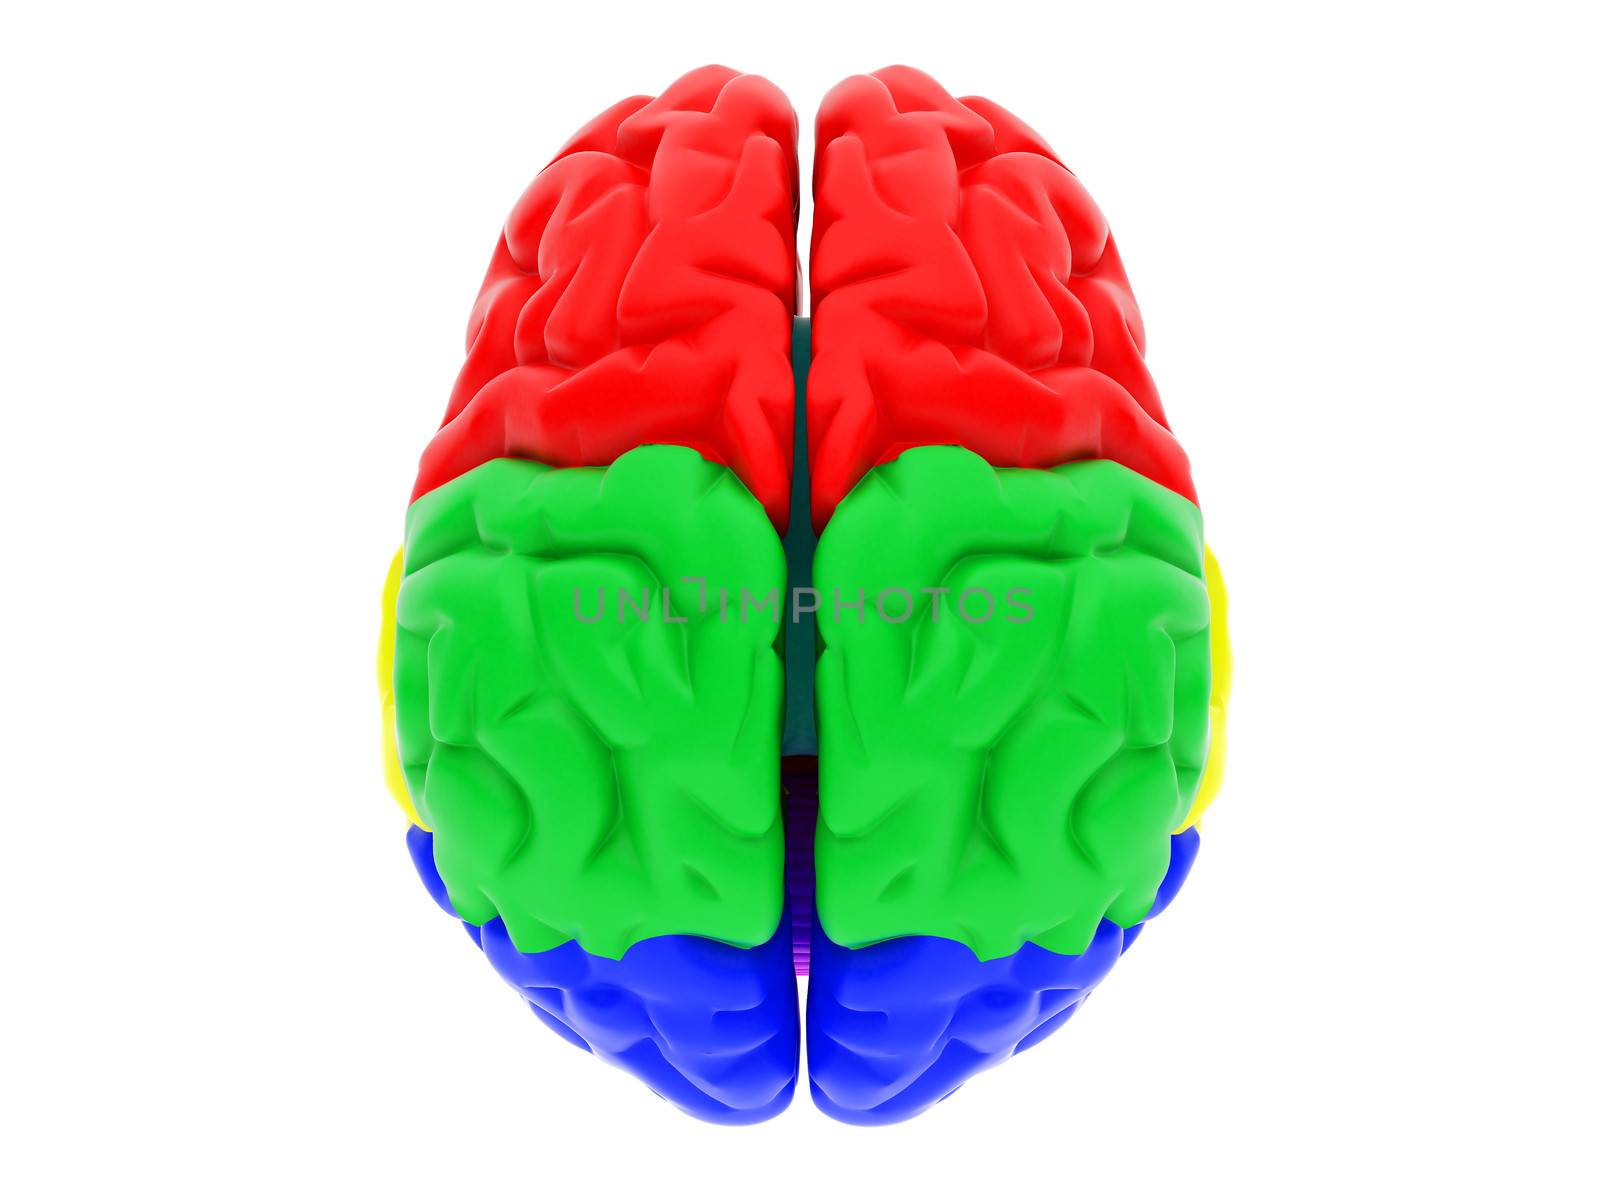 3d human brain by rook